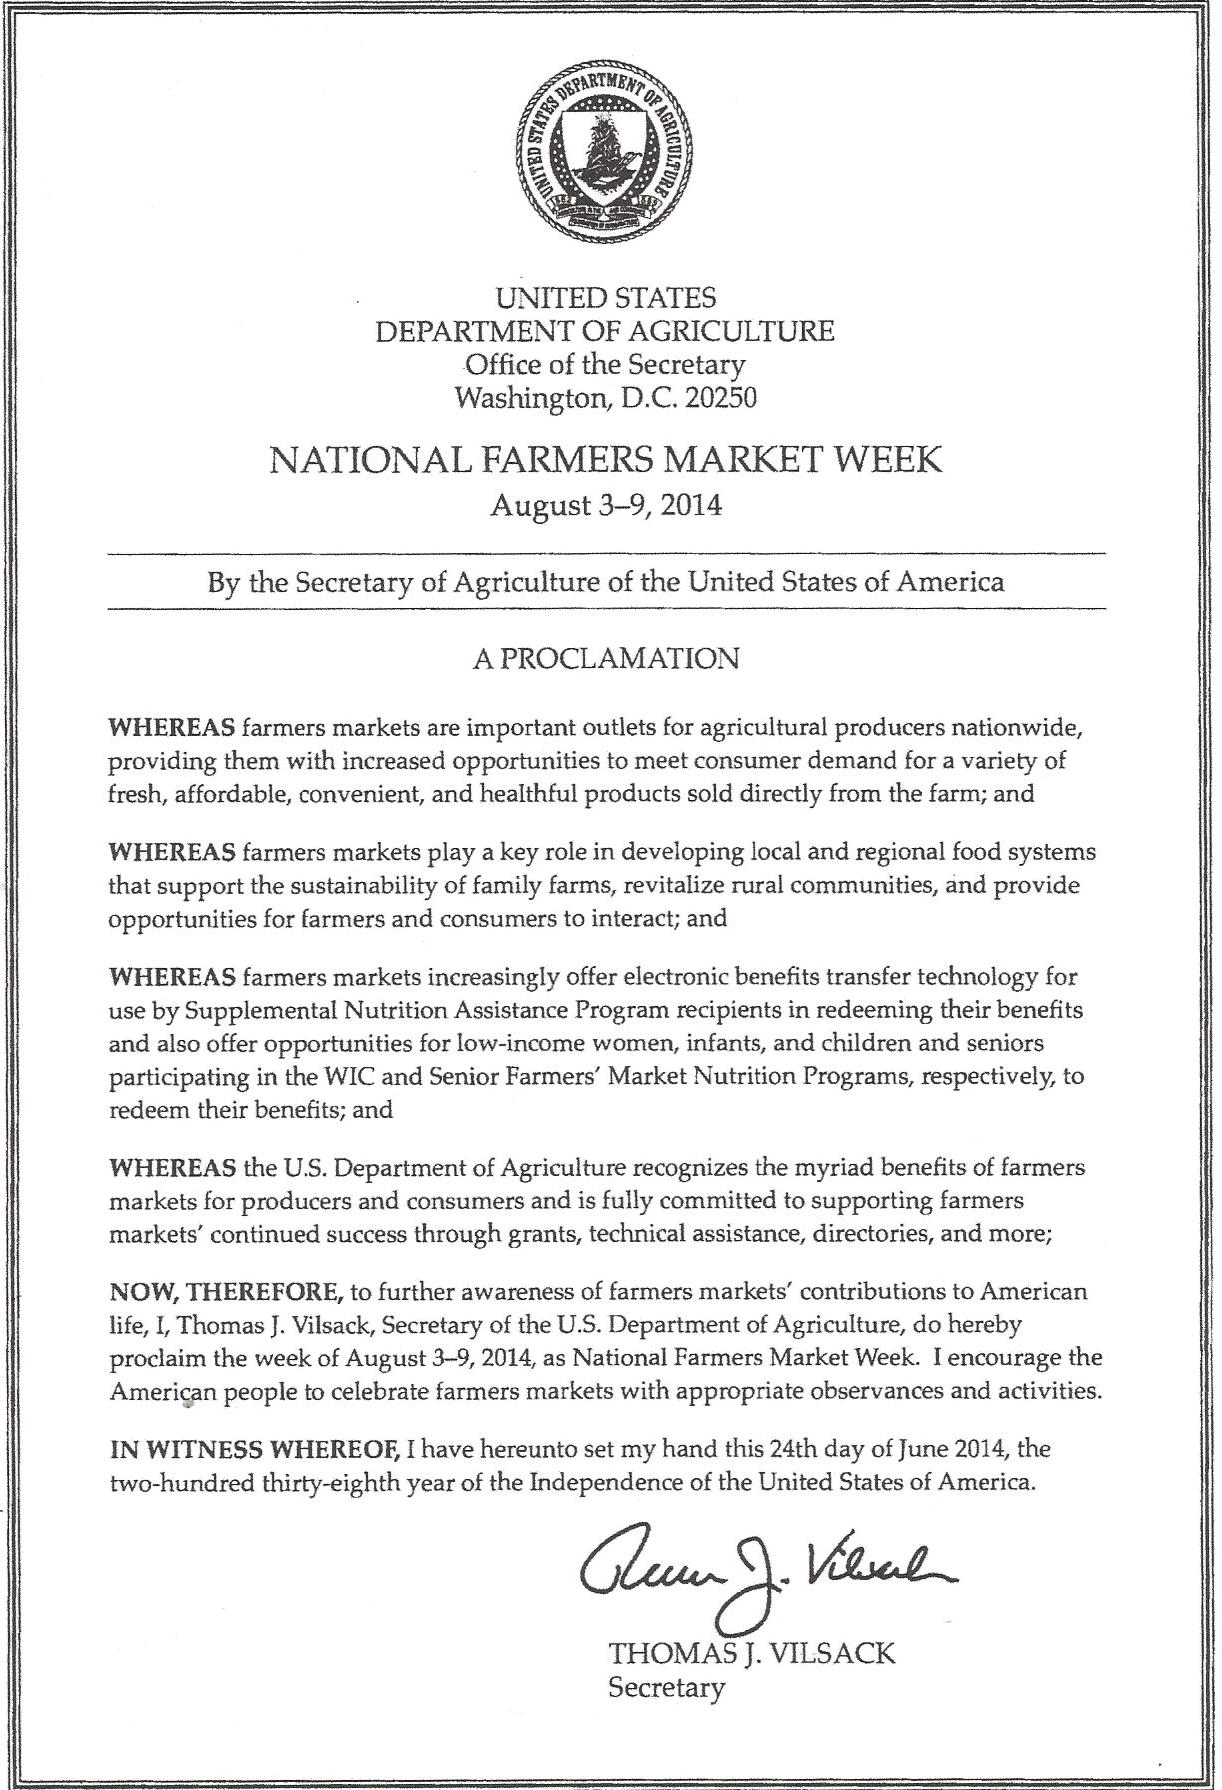 National Farmers Market Week Proclamation